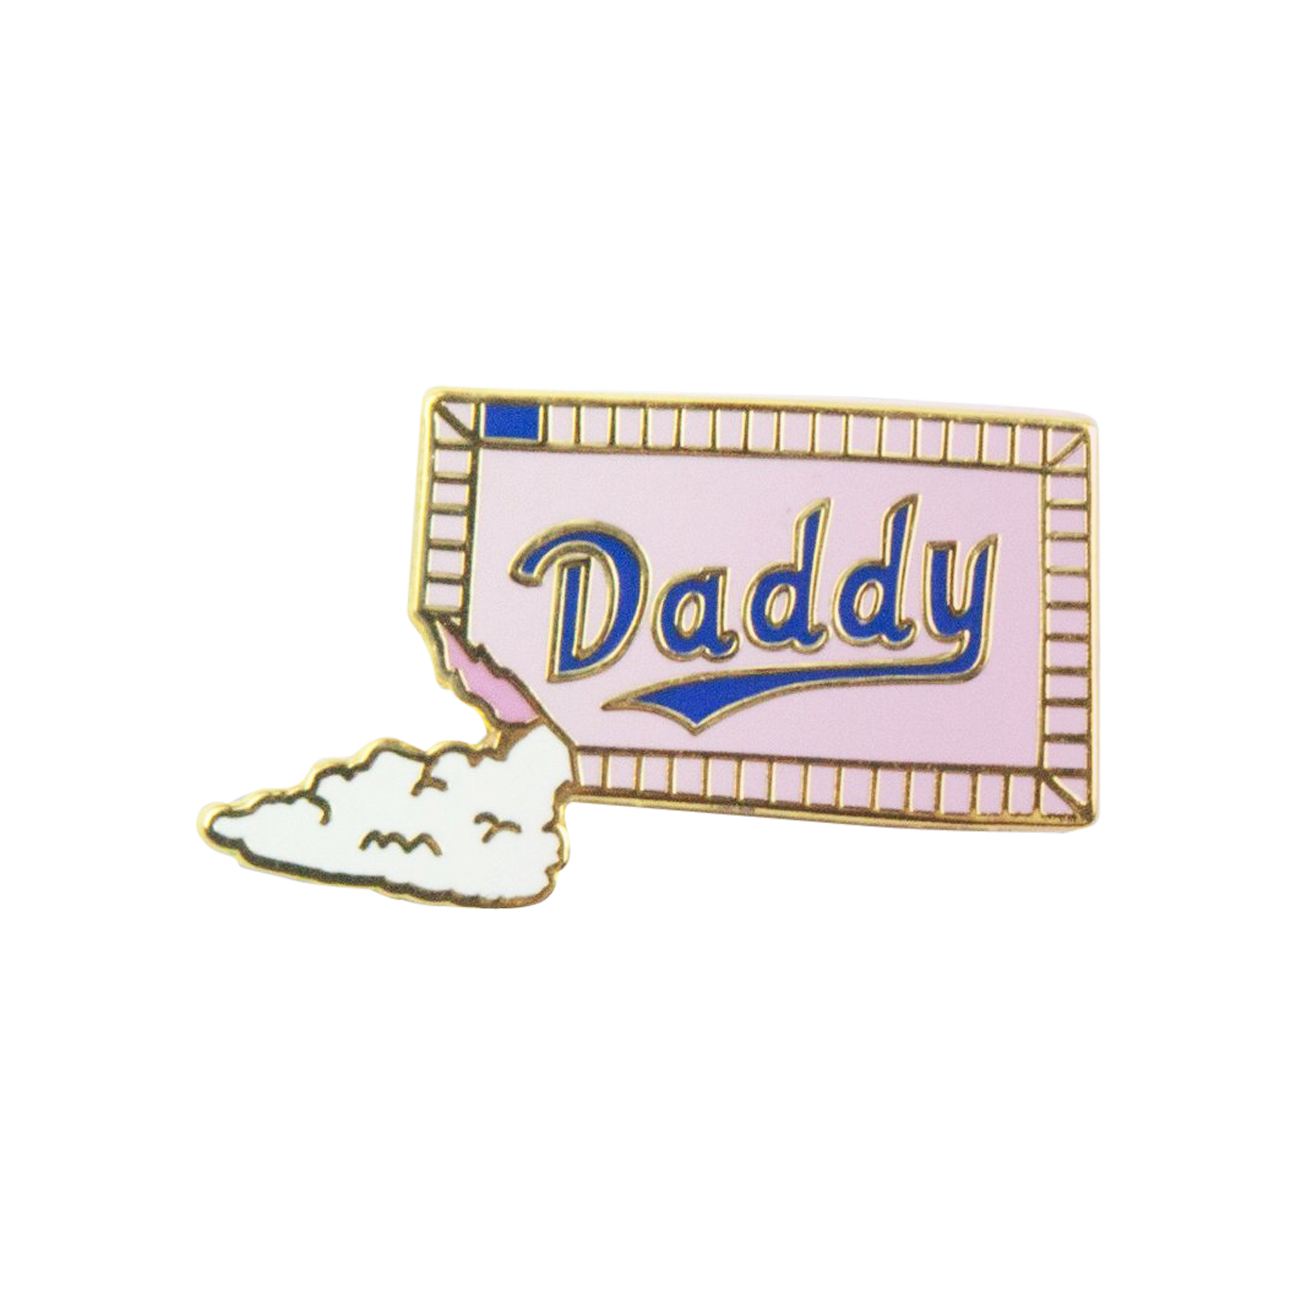 Sugar Daddy Pin